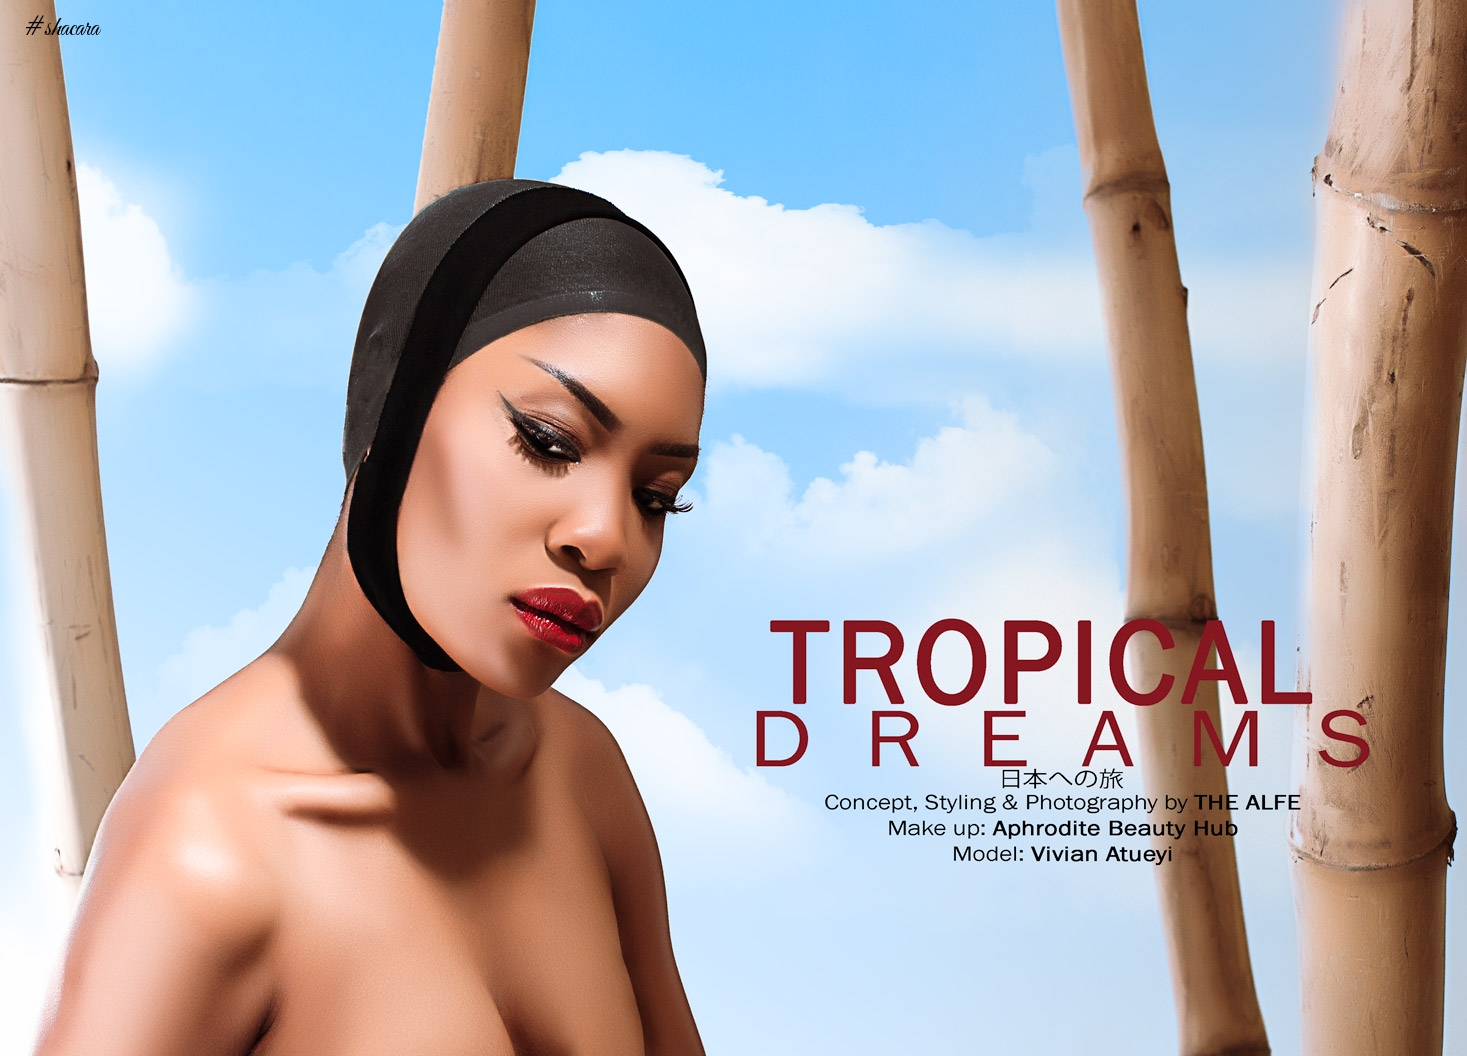 Nigerian Photographer The Alfe Presents ‘Tropical Dreams’